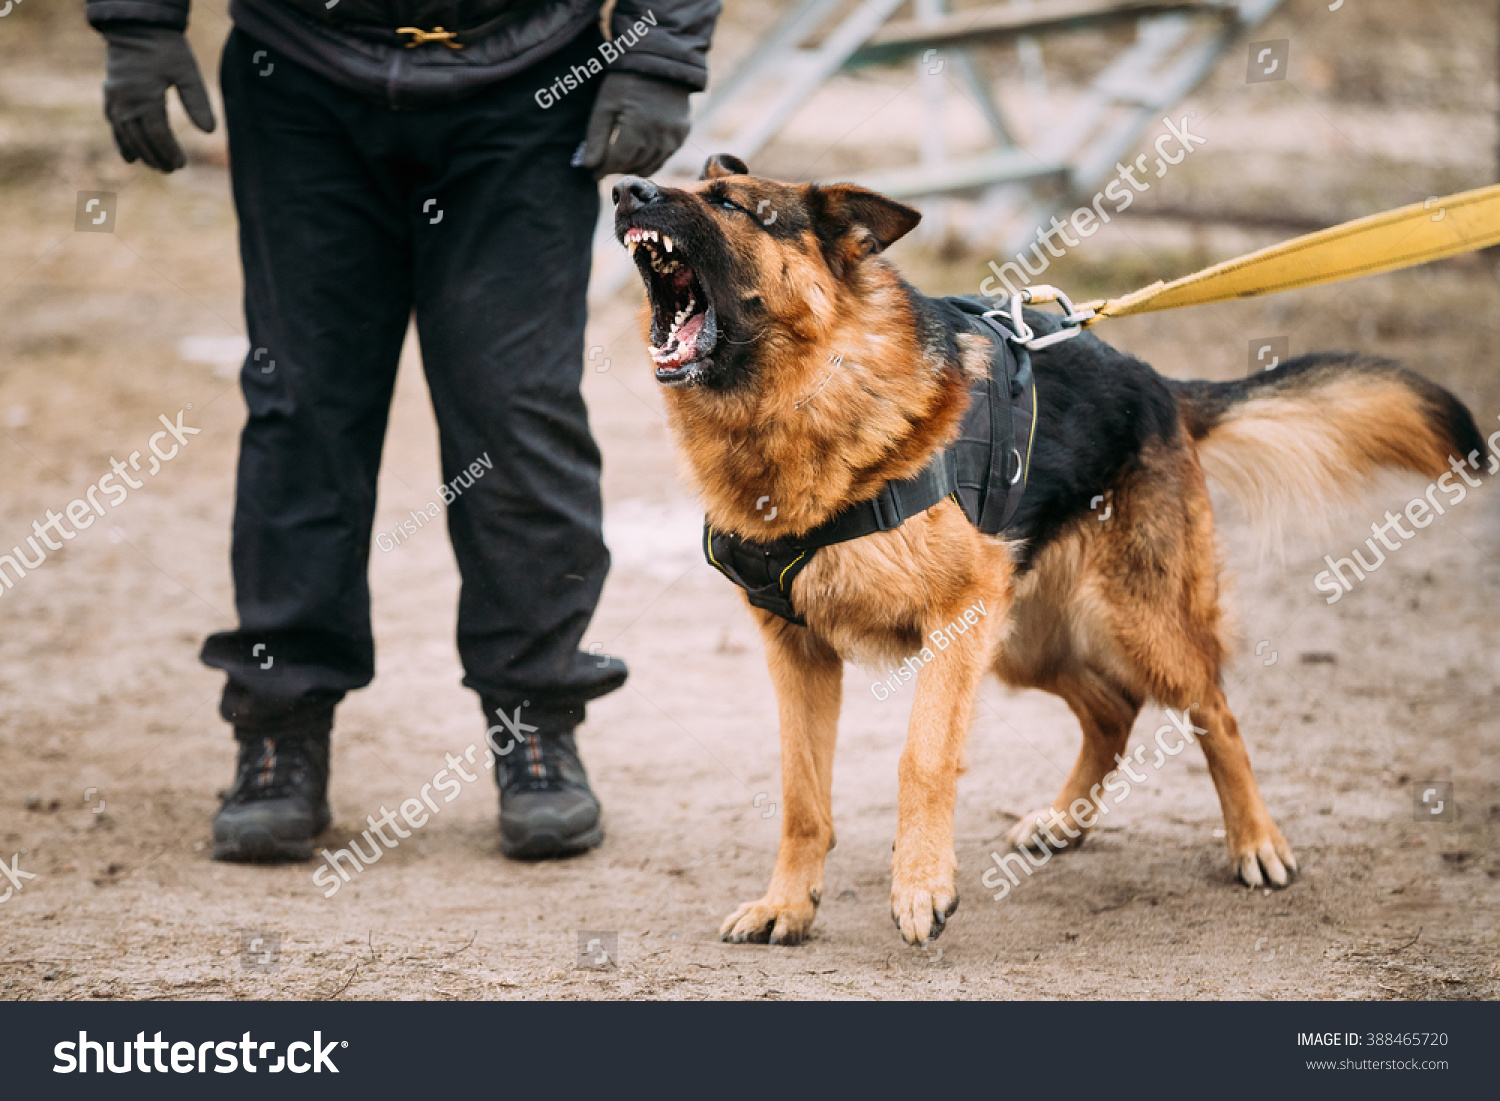 Barking Angry German Shepherd Dog On Stock Photo 388465720 - Shutterstock